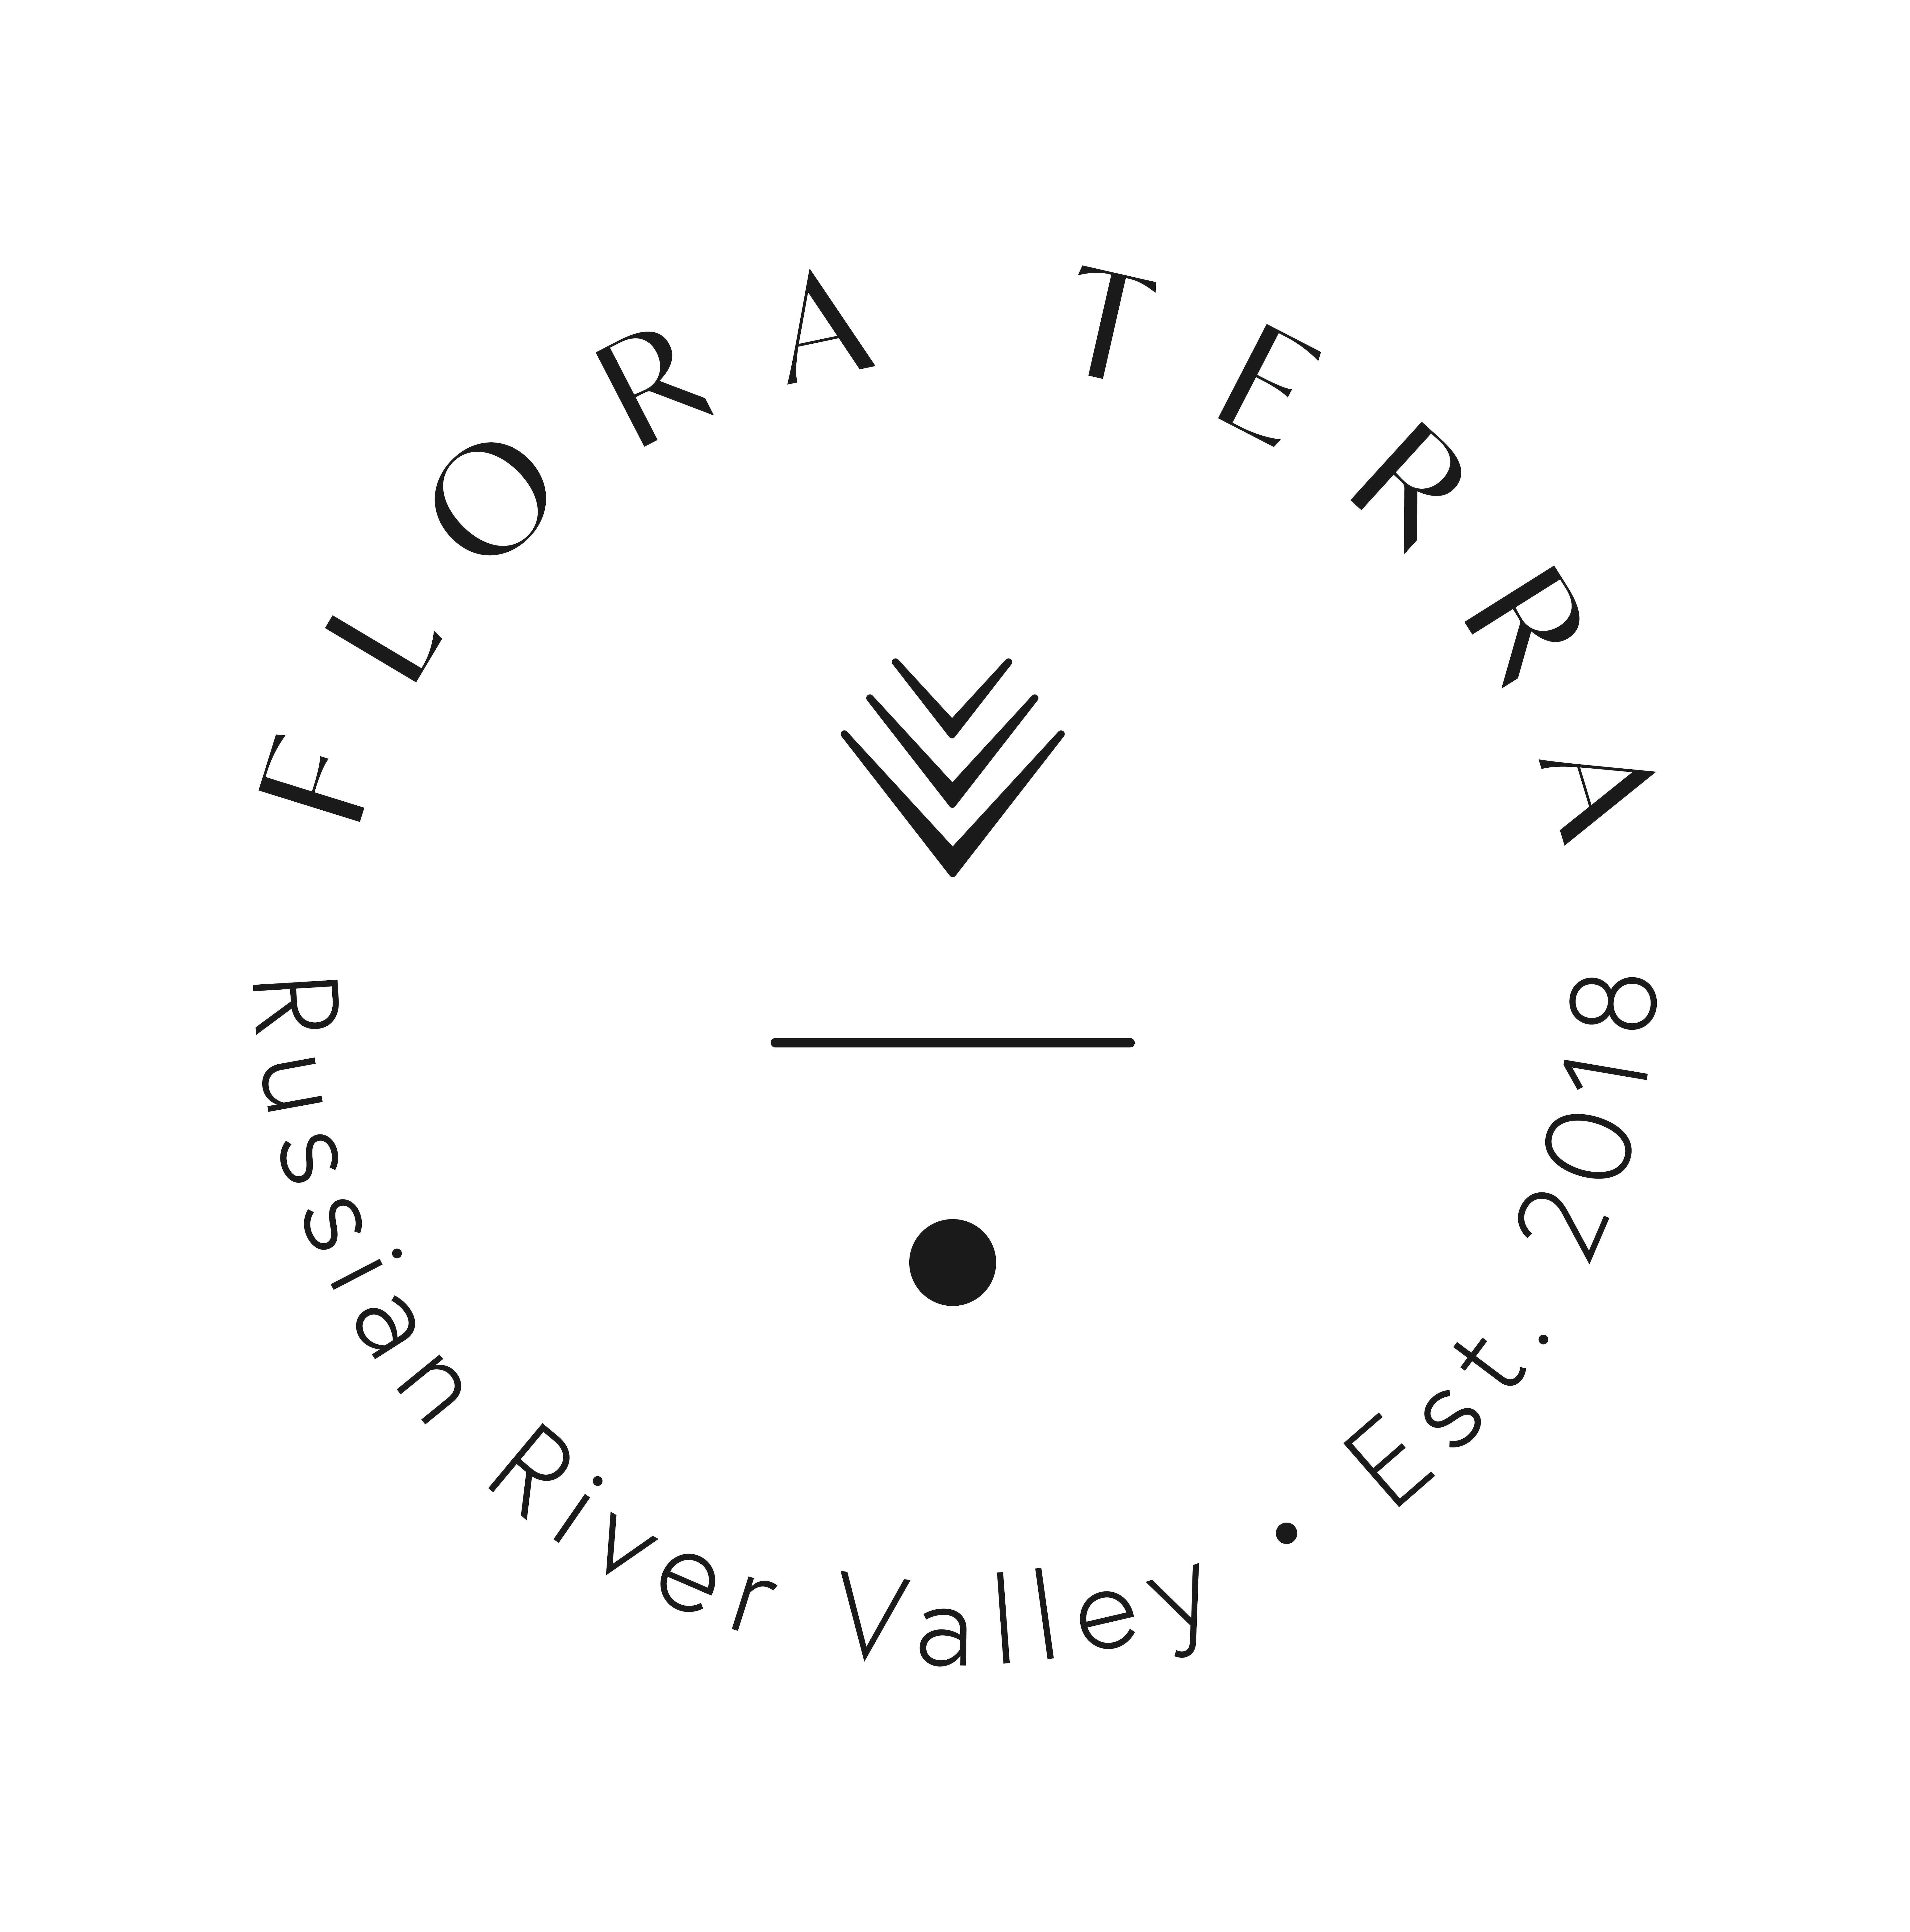 Flora Terra Cannabis Dispensary logo